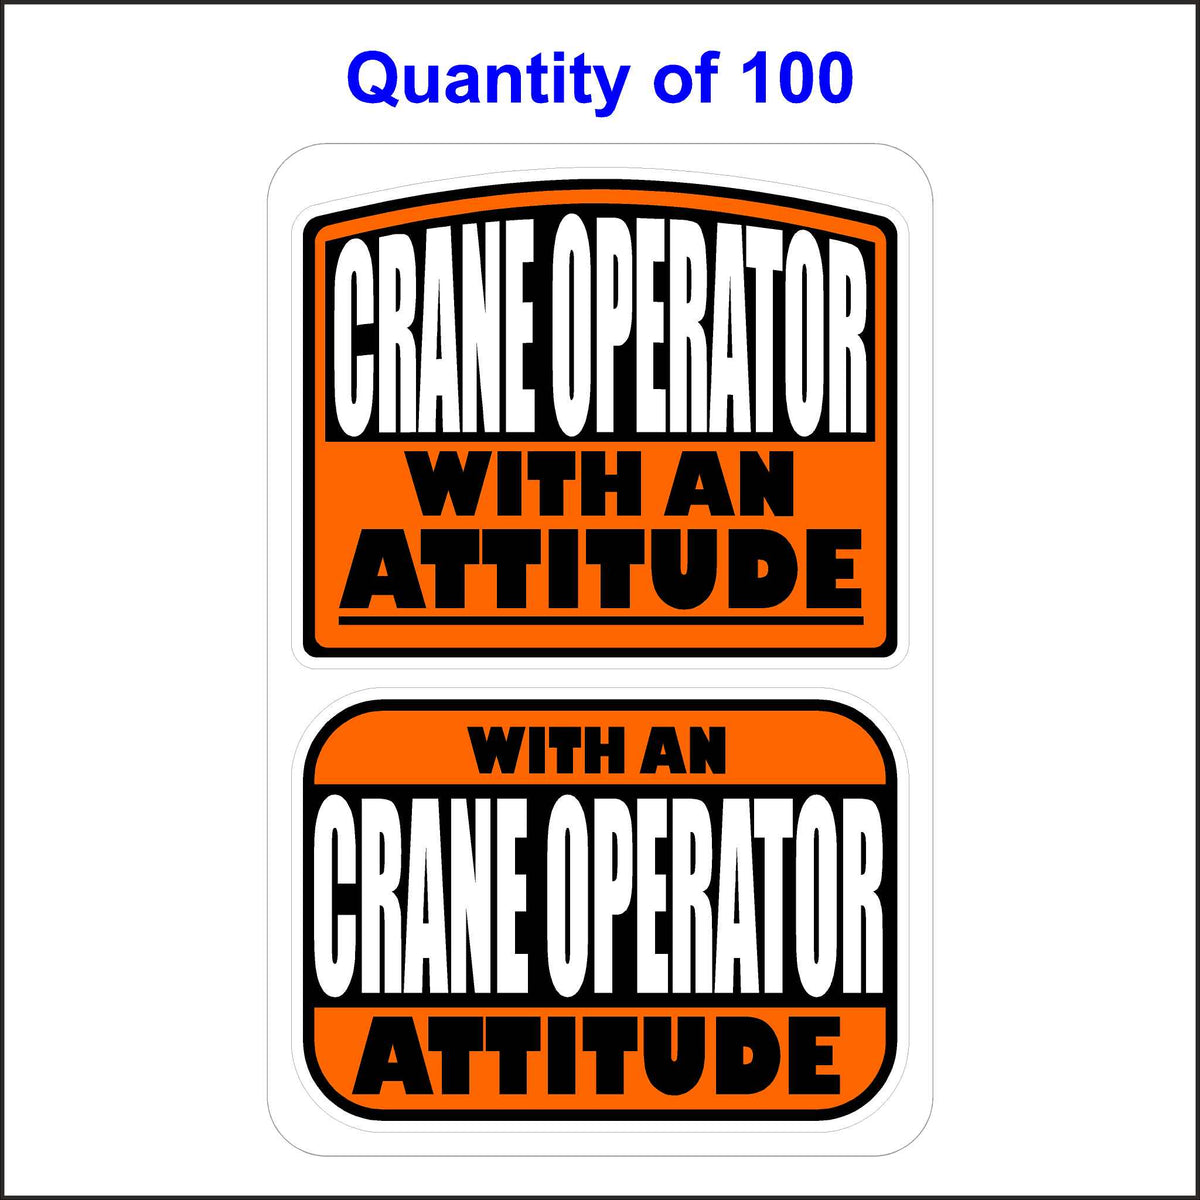 Crane Operator With An Attitude Stickers 100 Quantity.